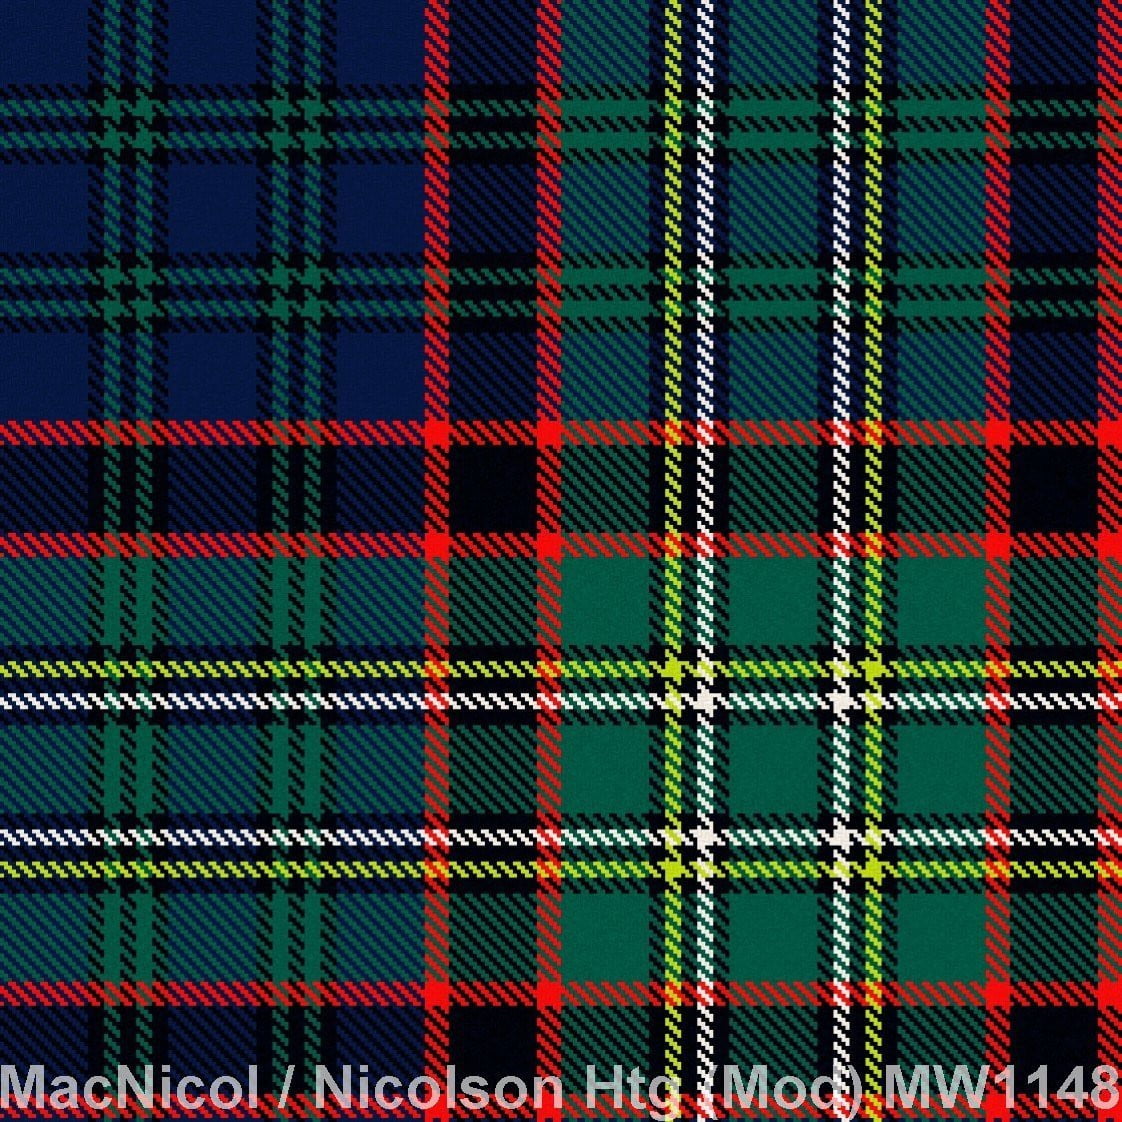 Nicolson/MacNicol Hunting Modern